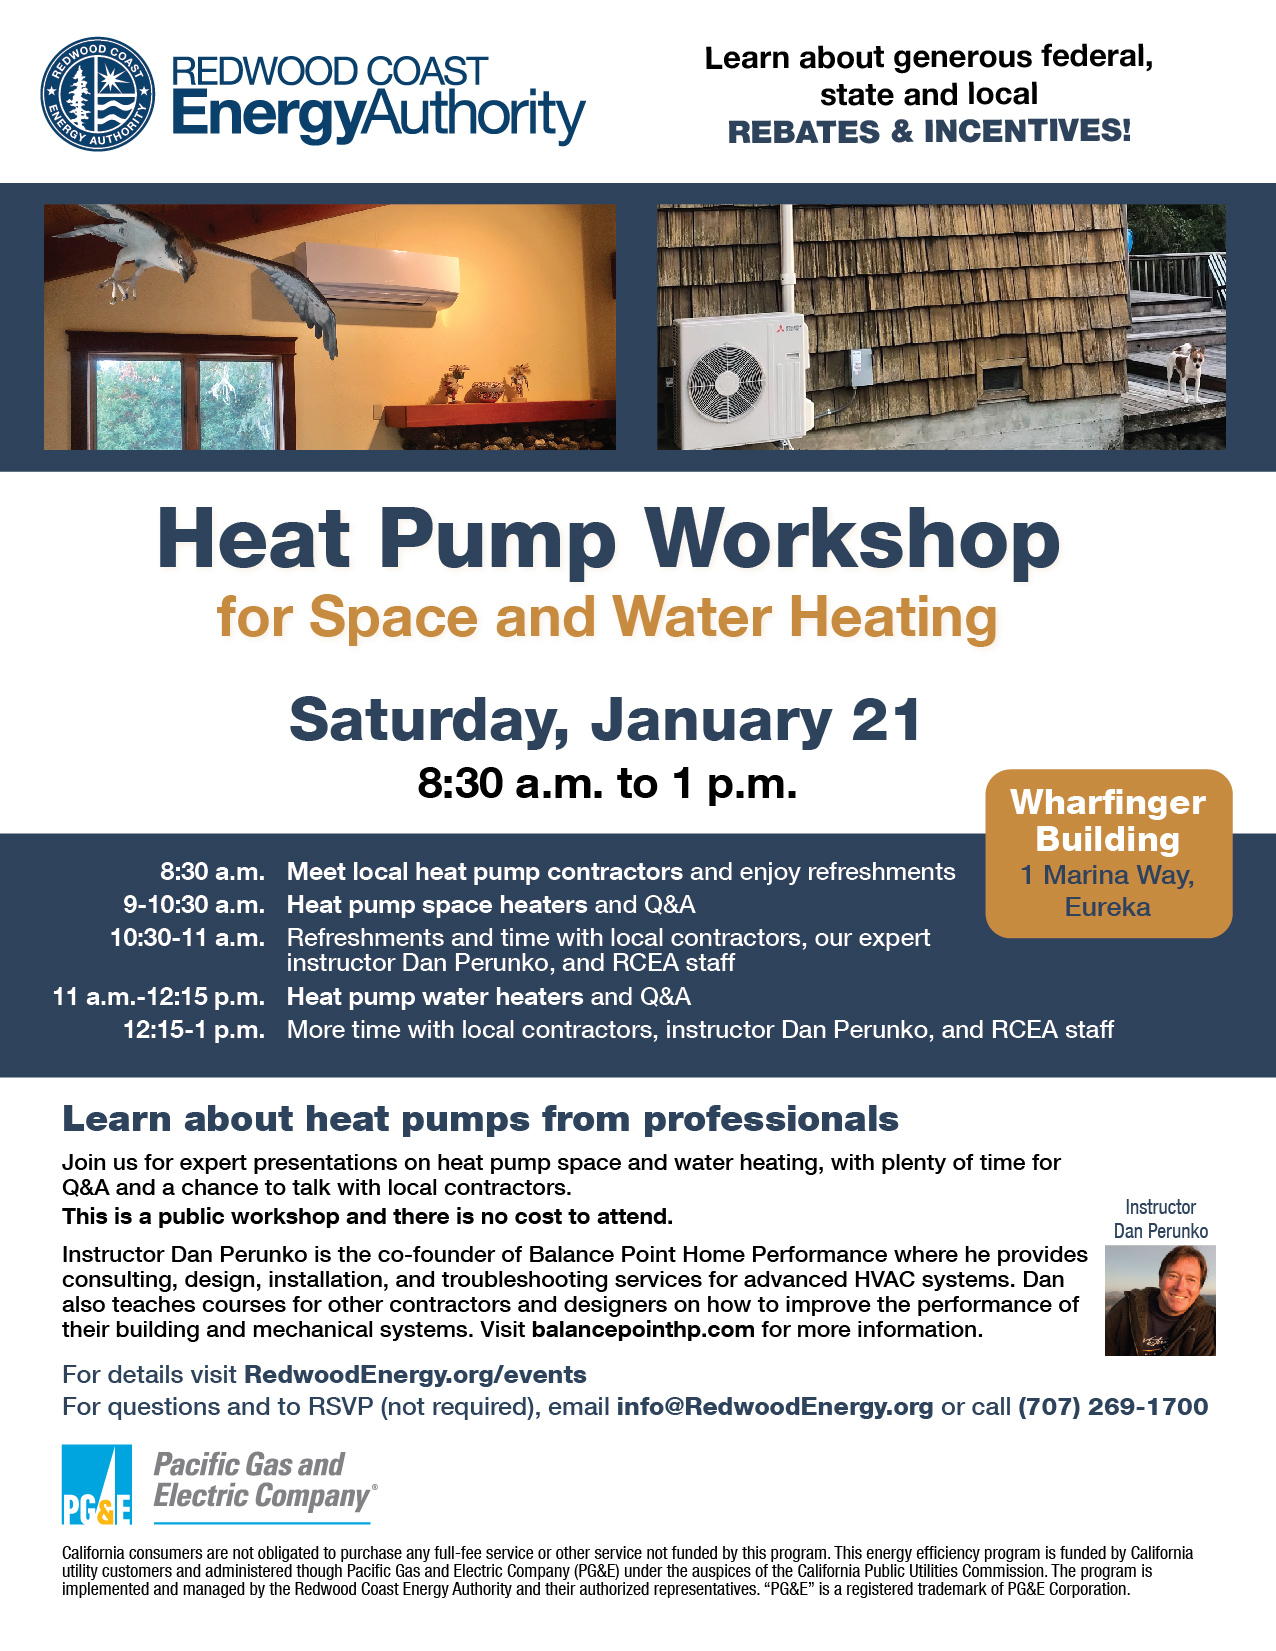 flyer for RCEA's heat pump workshop on Saturday, Jan. 21